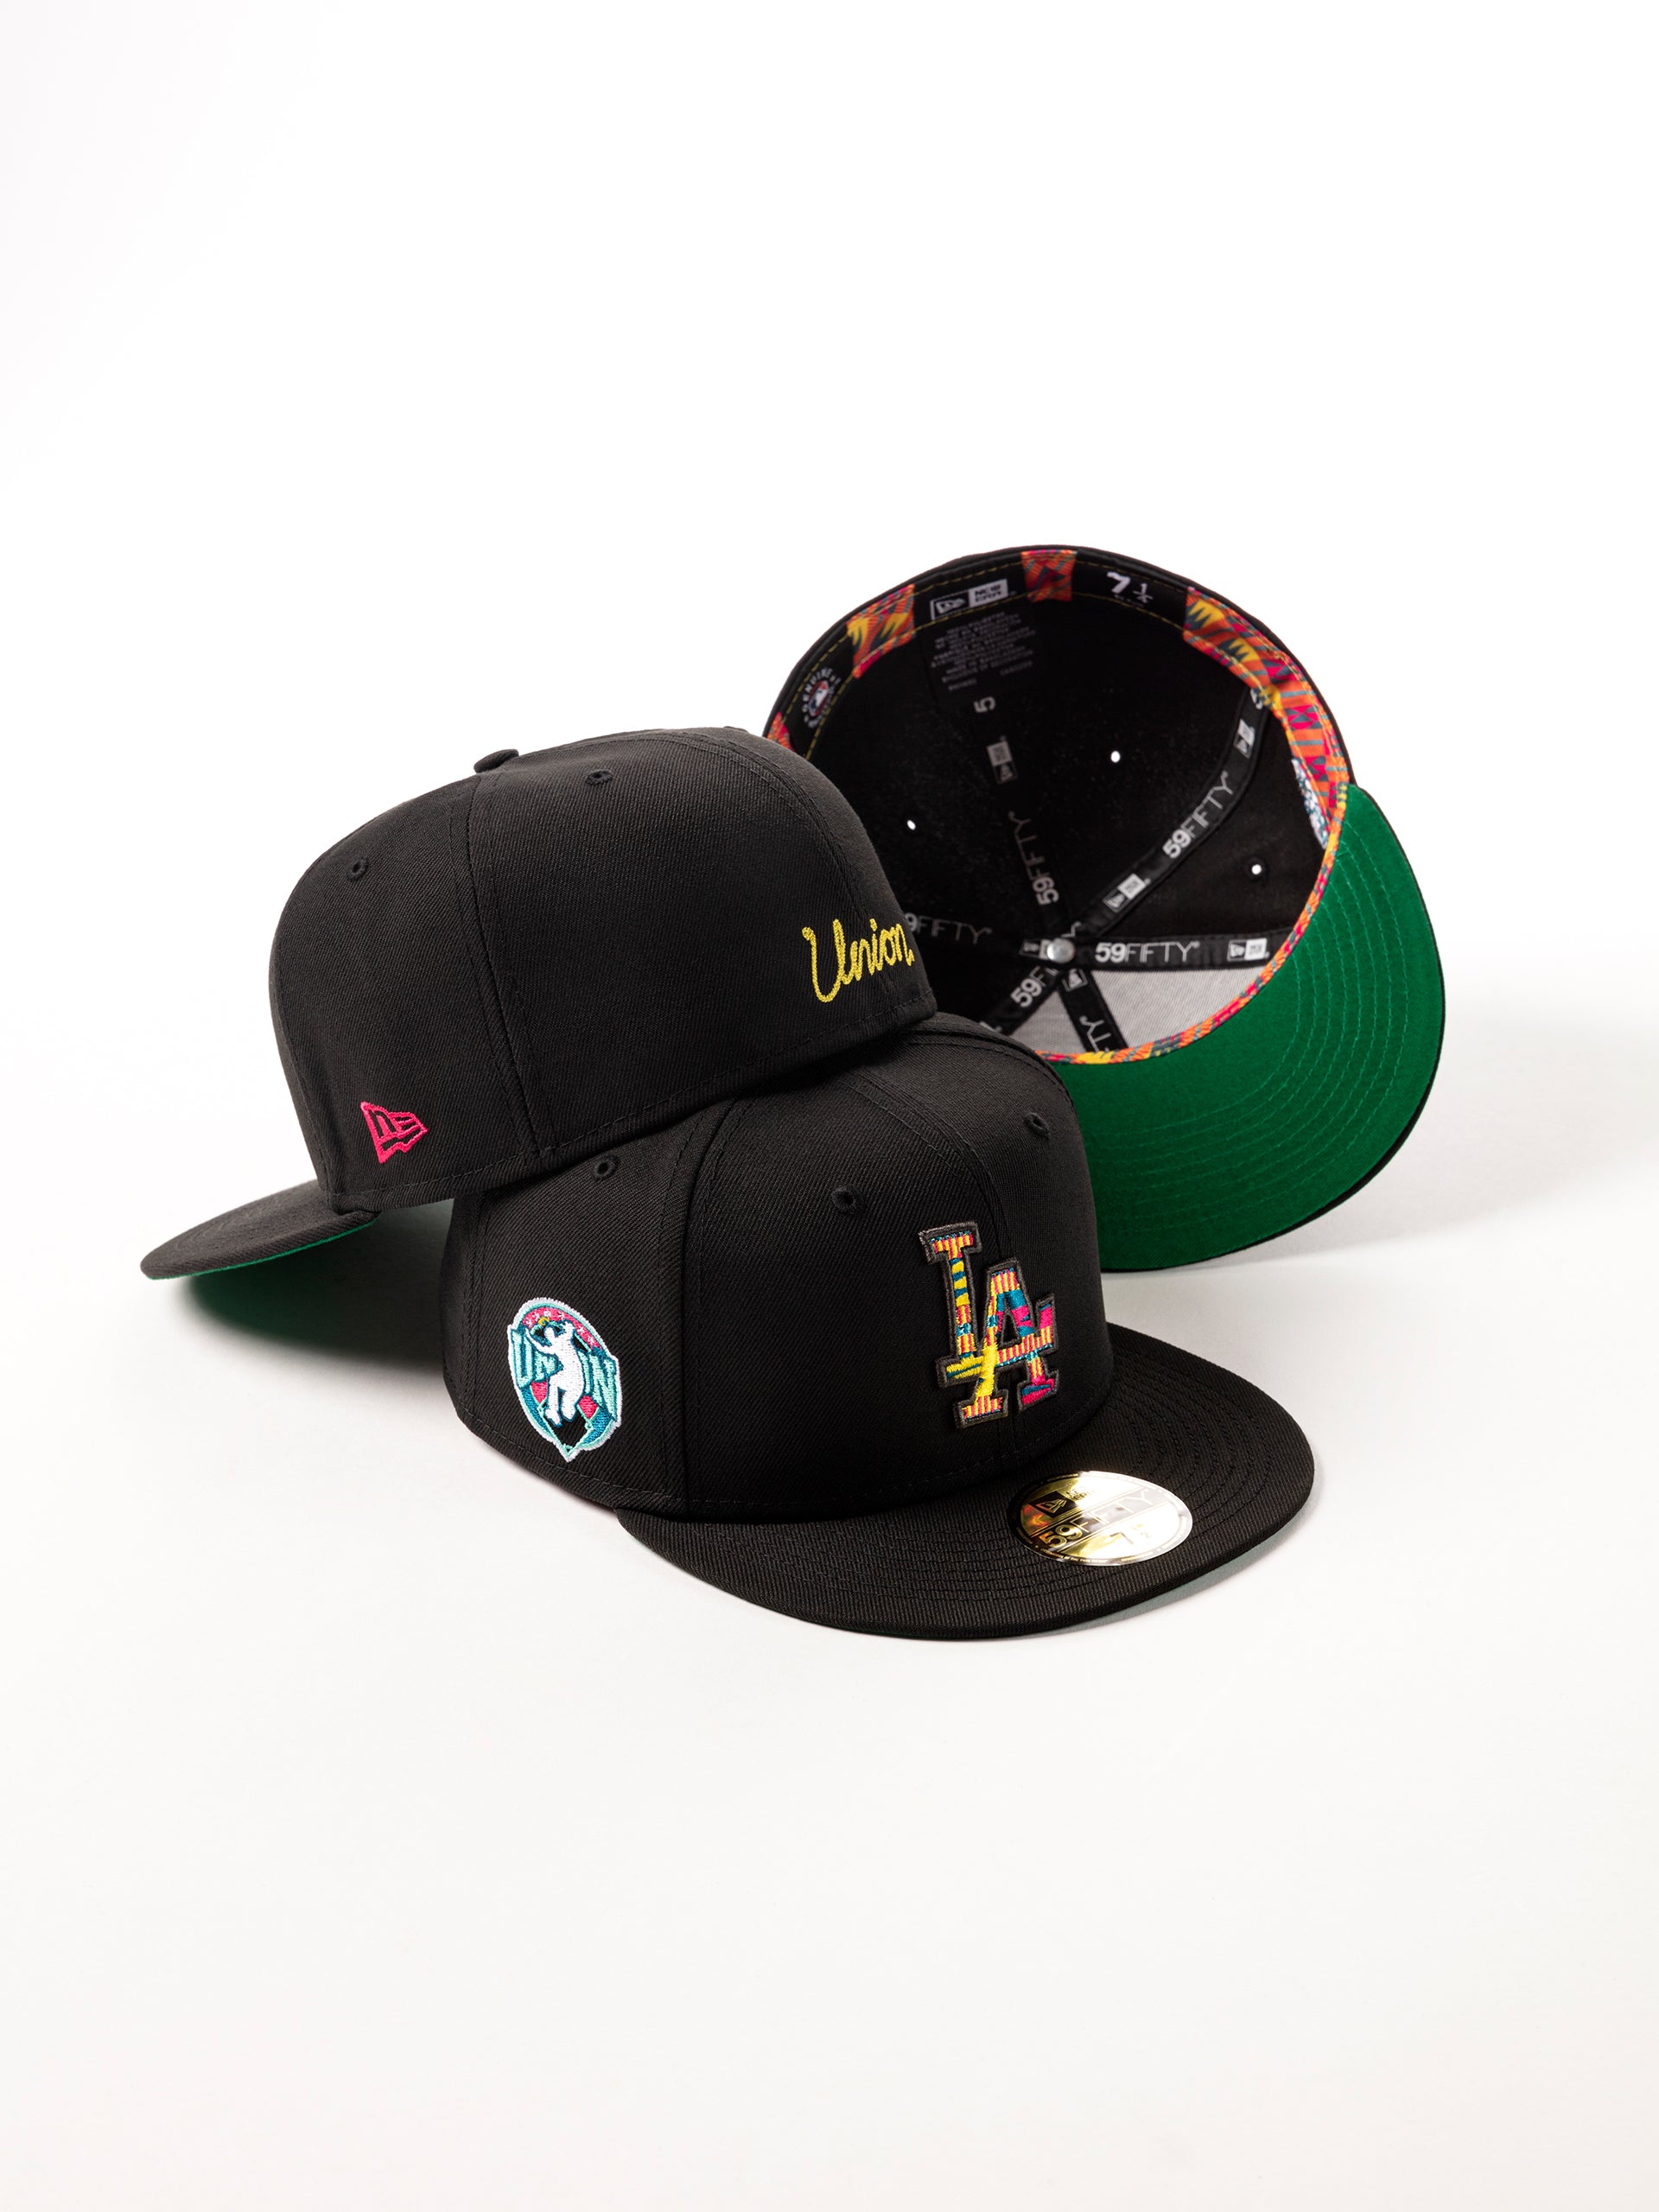 New Era, Accessories, New Era Custom Los Angeles Dodgers Fitted Hat